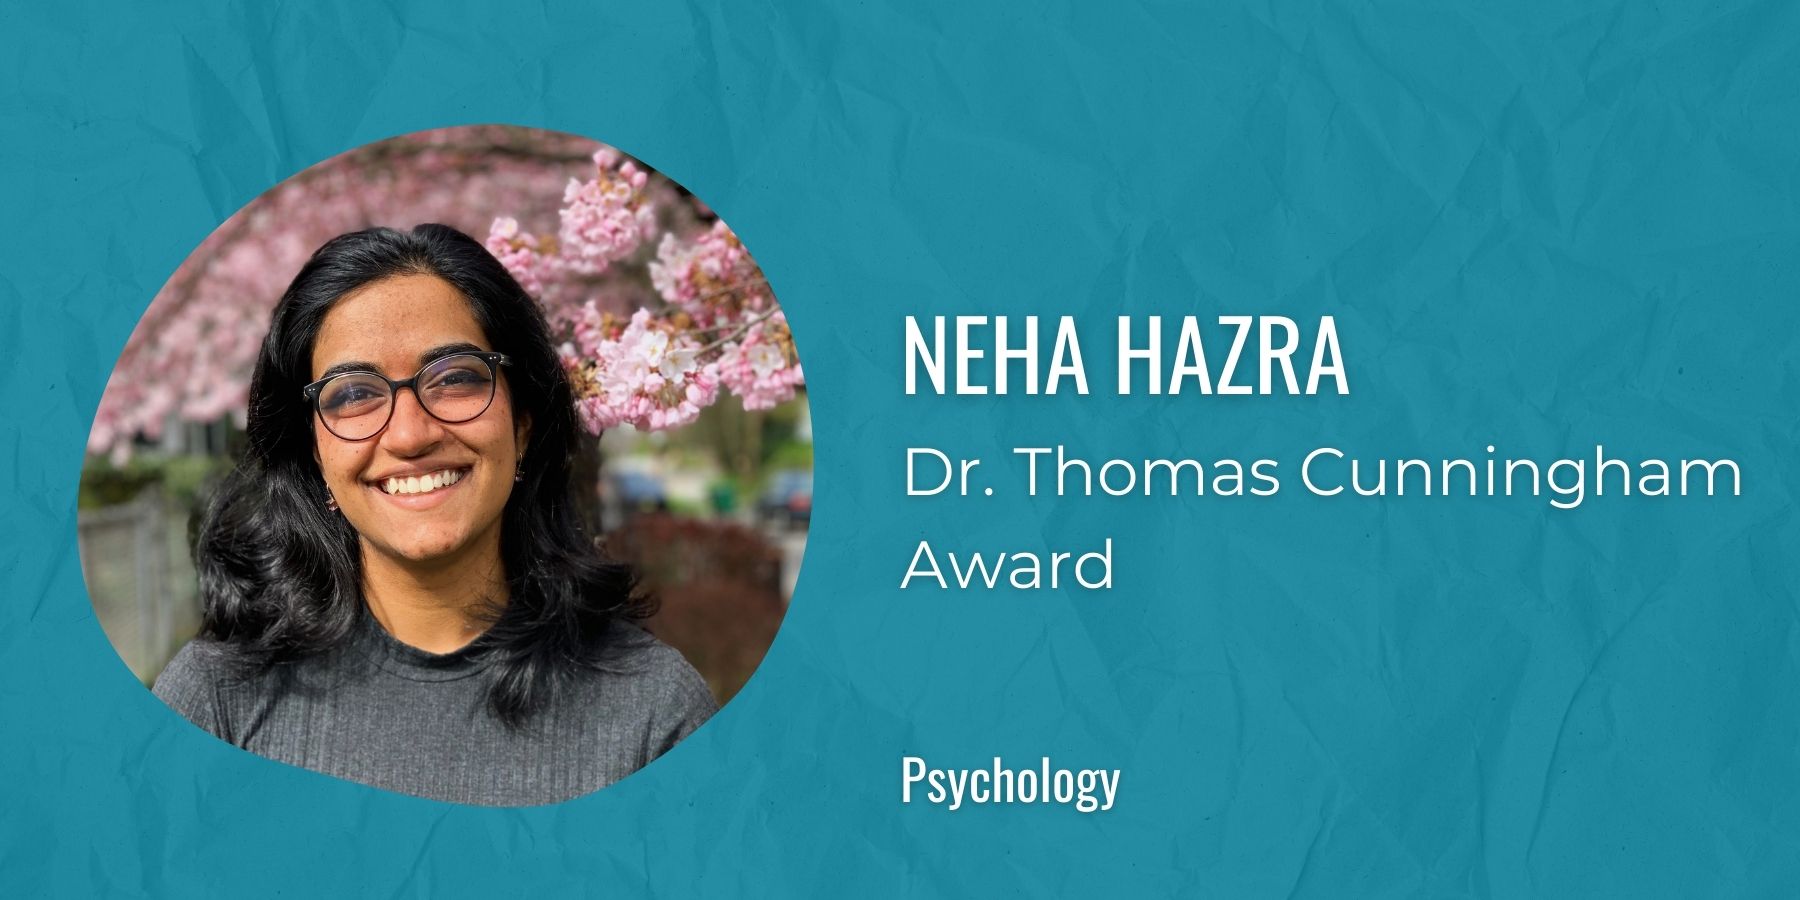 Image of Neha Hazra with text: Dr. Thomas Cunningham award, Psychology
